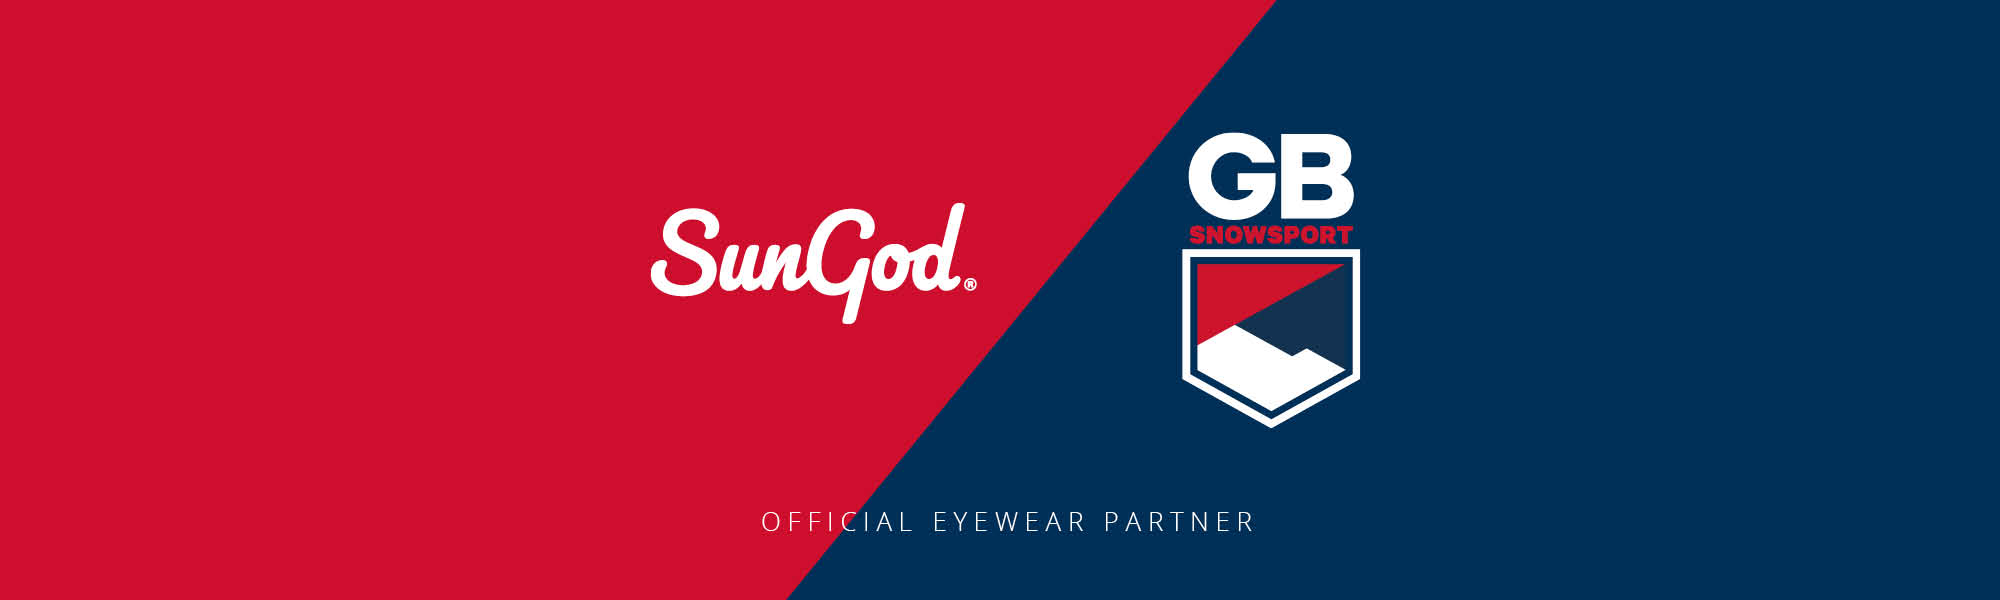 Official Eyewear Partner of GB Snowsport